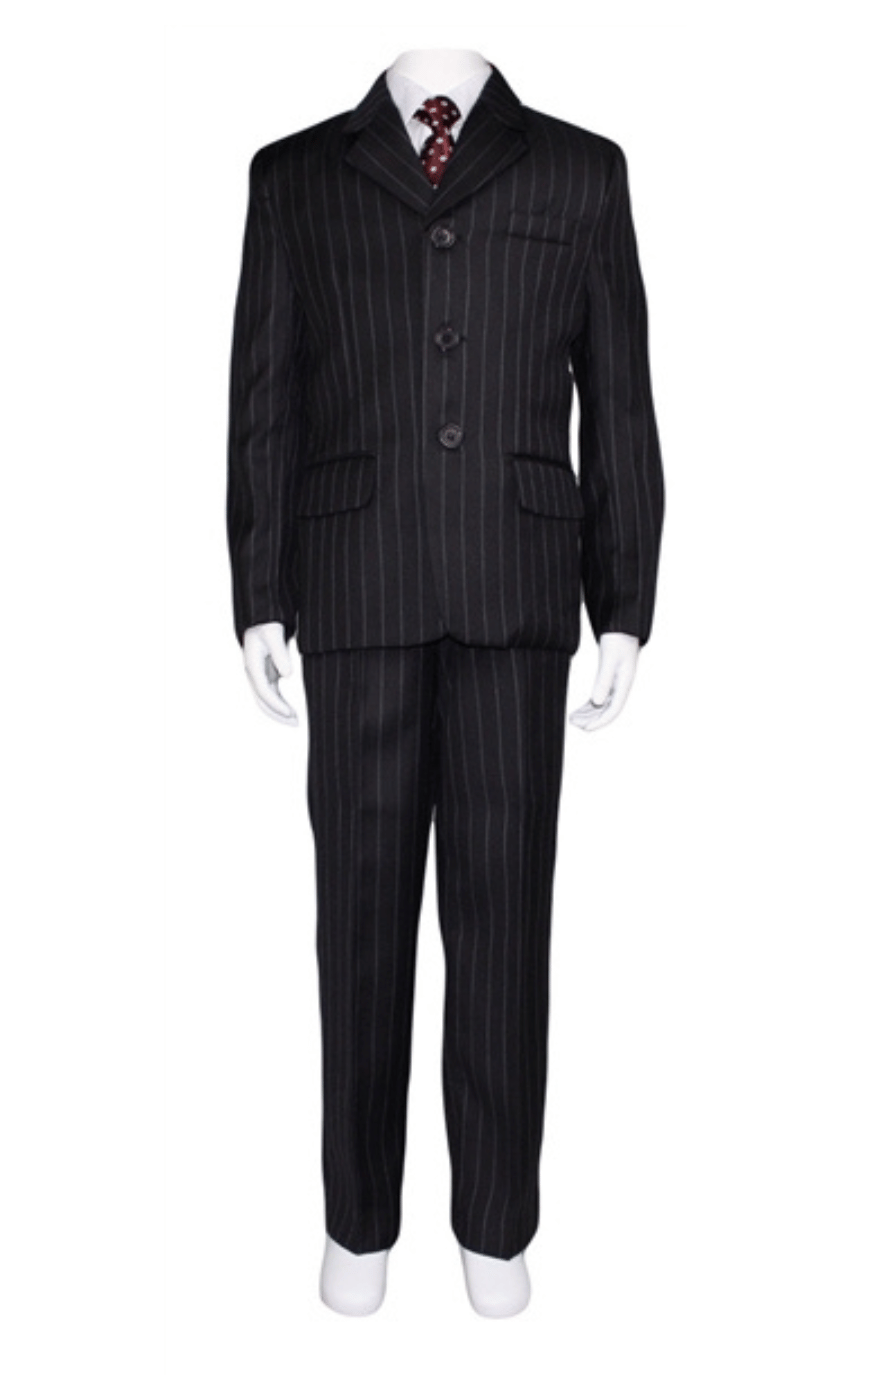 Edward 5pc Suit: BLACK Stripe